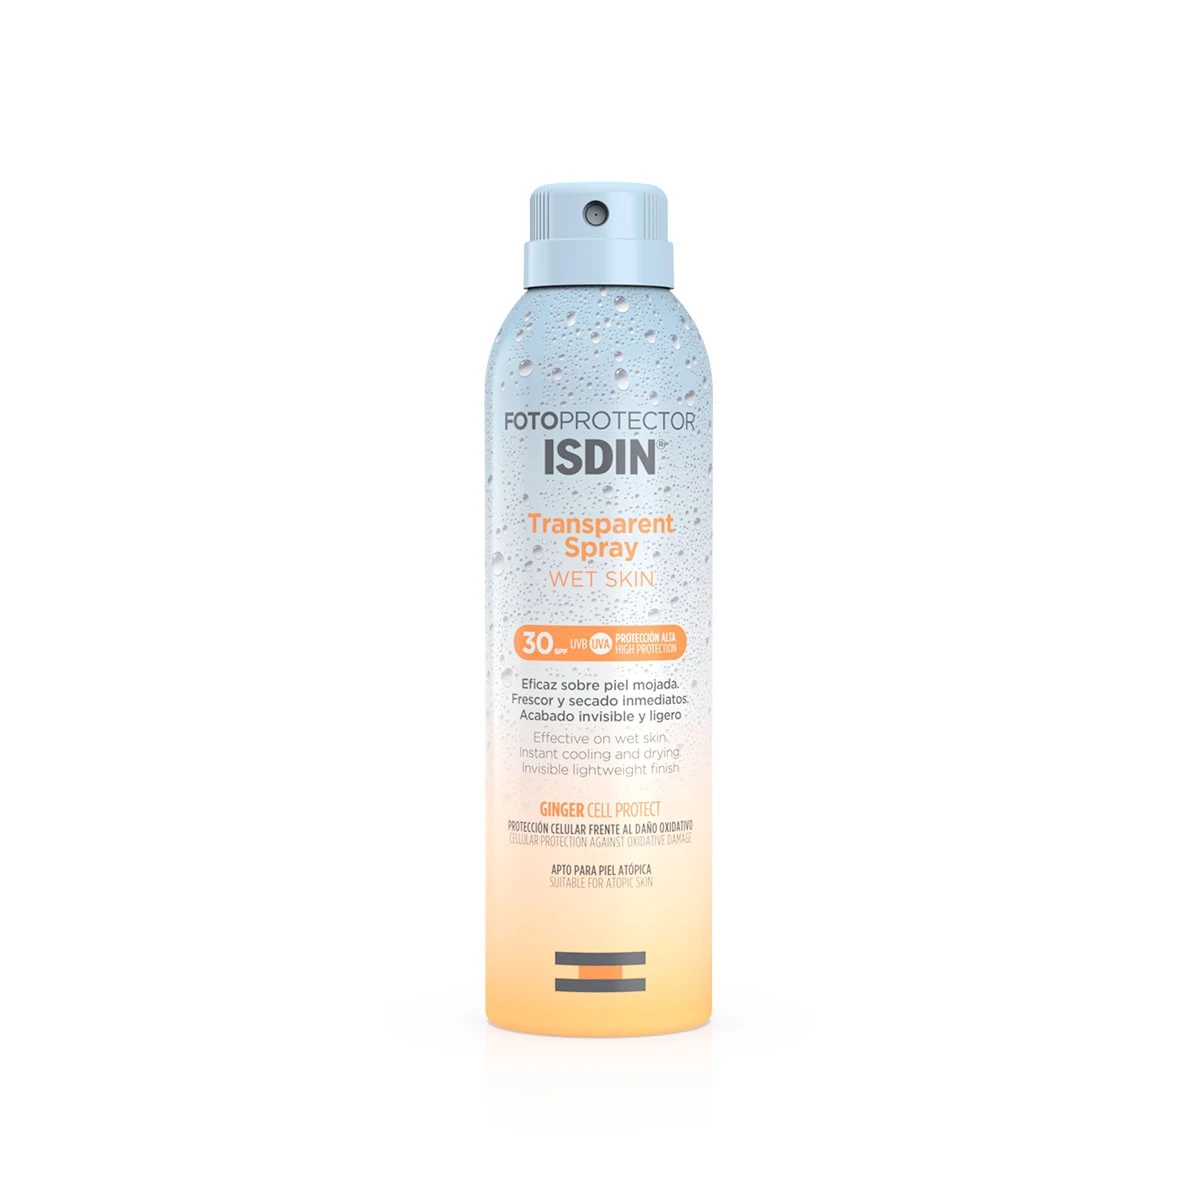 Isdin Fotoprotector Spray Transparent Wet SPF30, 250ml.